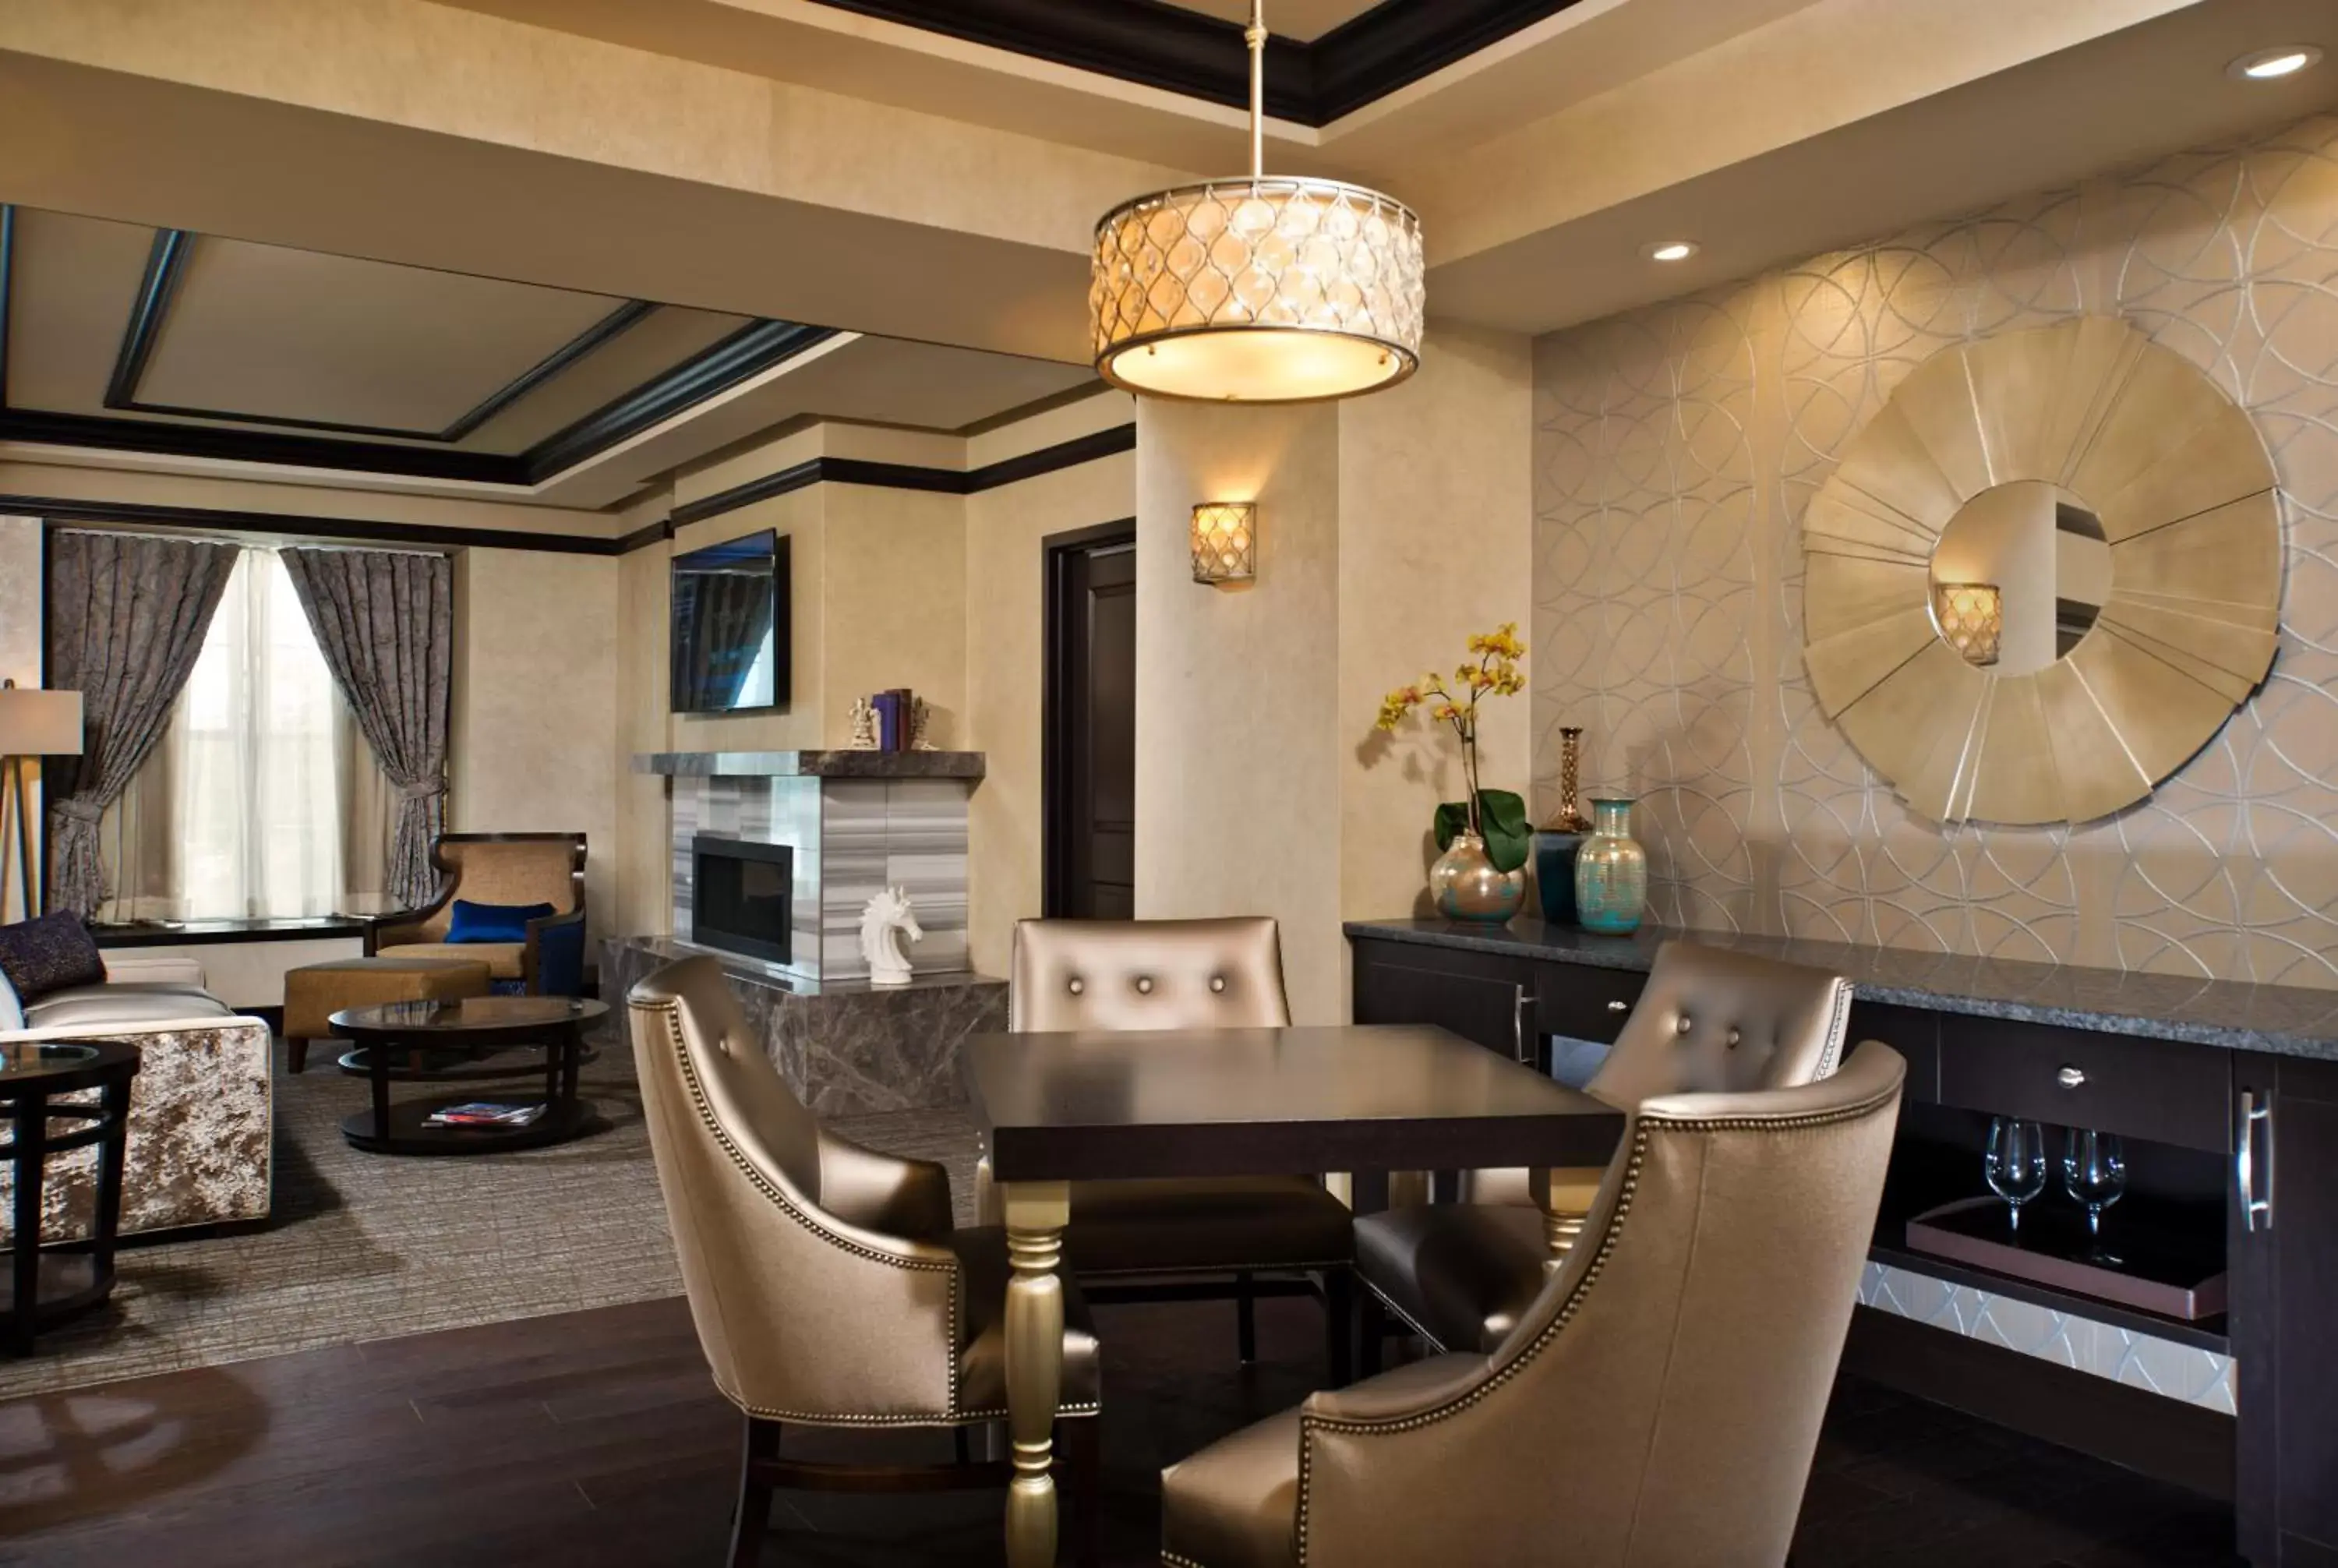 Living room in Saratoga Casino Hotel